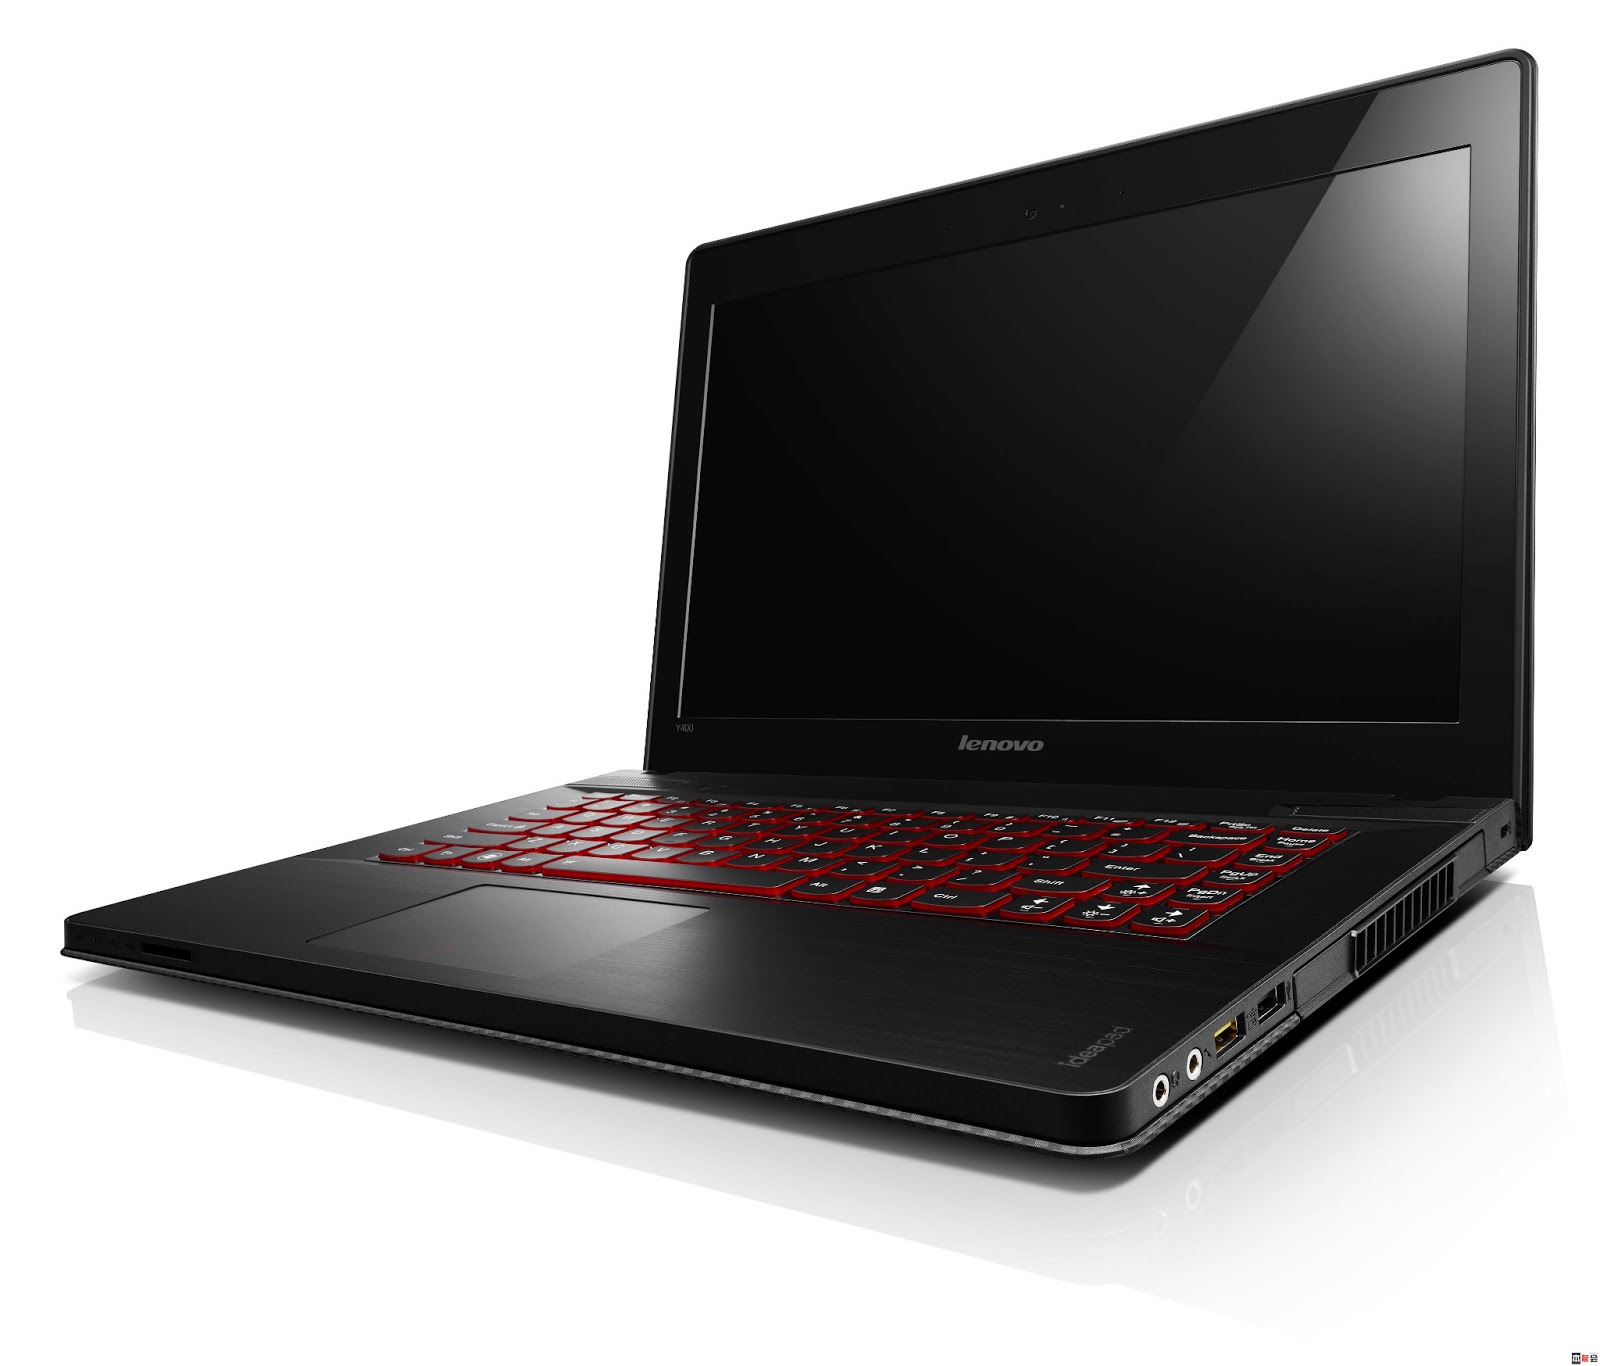 Best Deals Lenovo IdeaPad Y410p Multimedia Laptop - HOT SALE COMPUTER